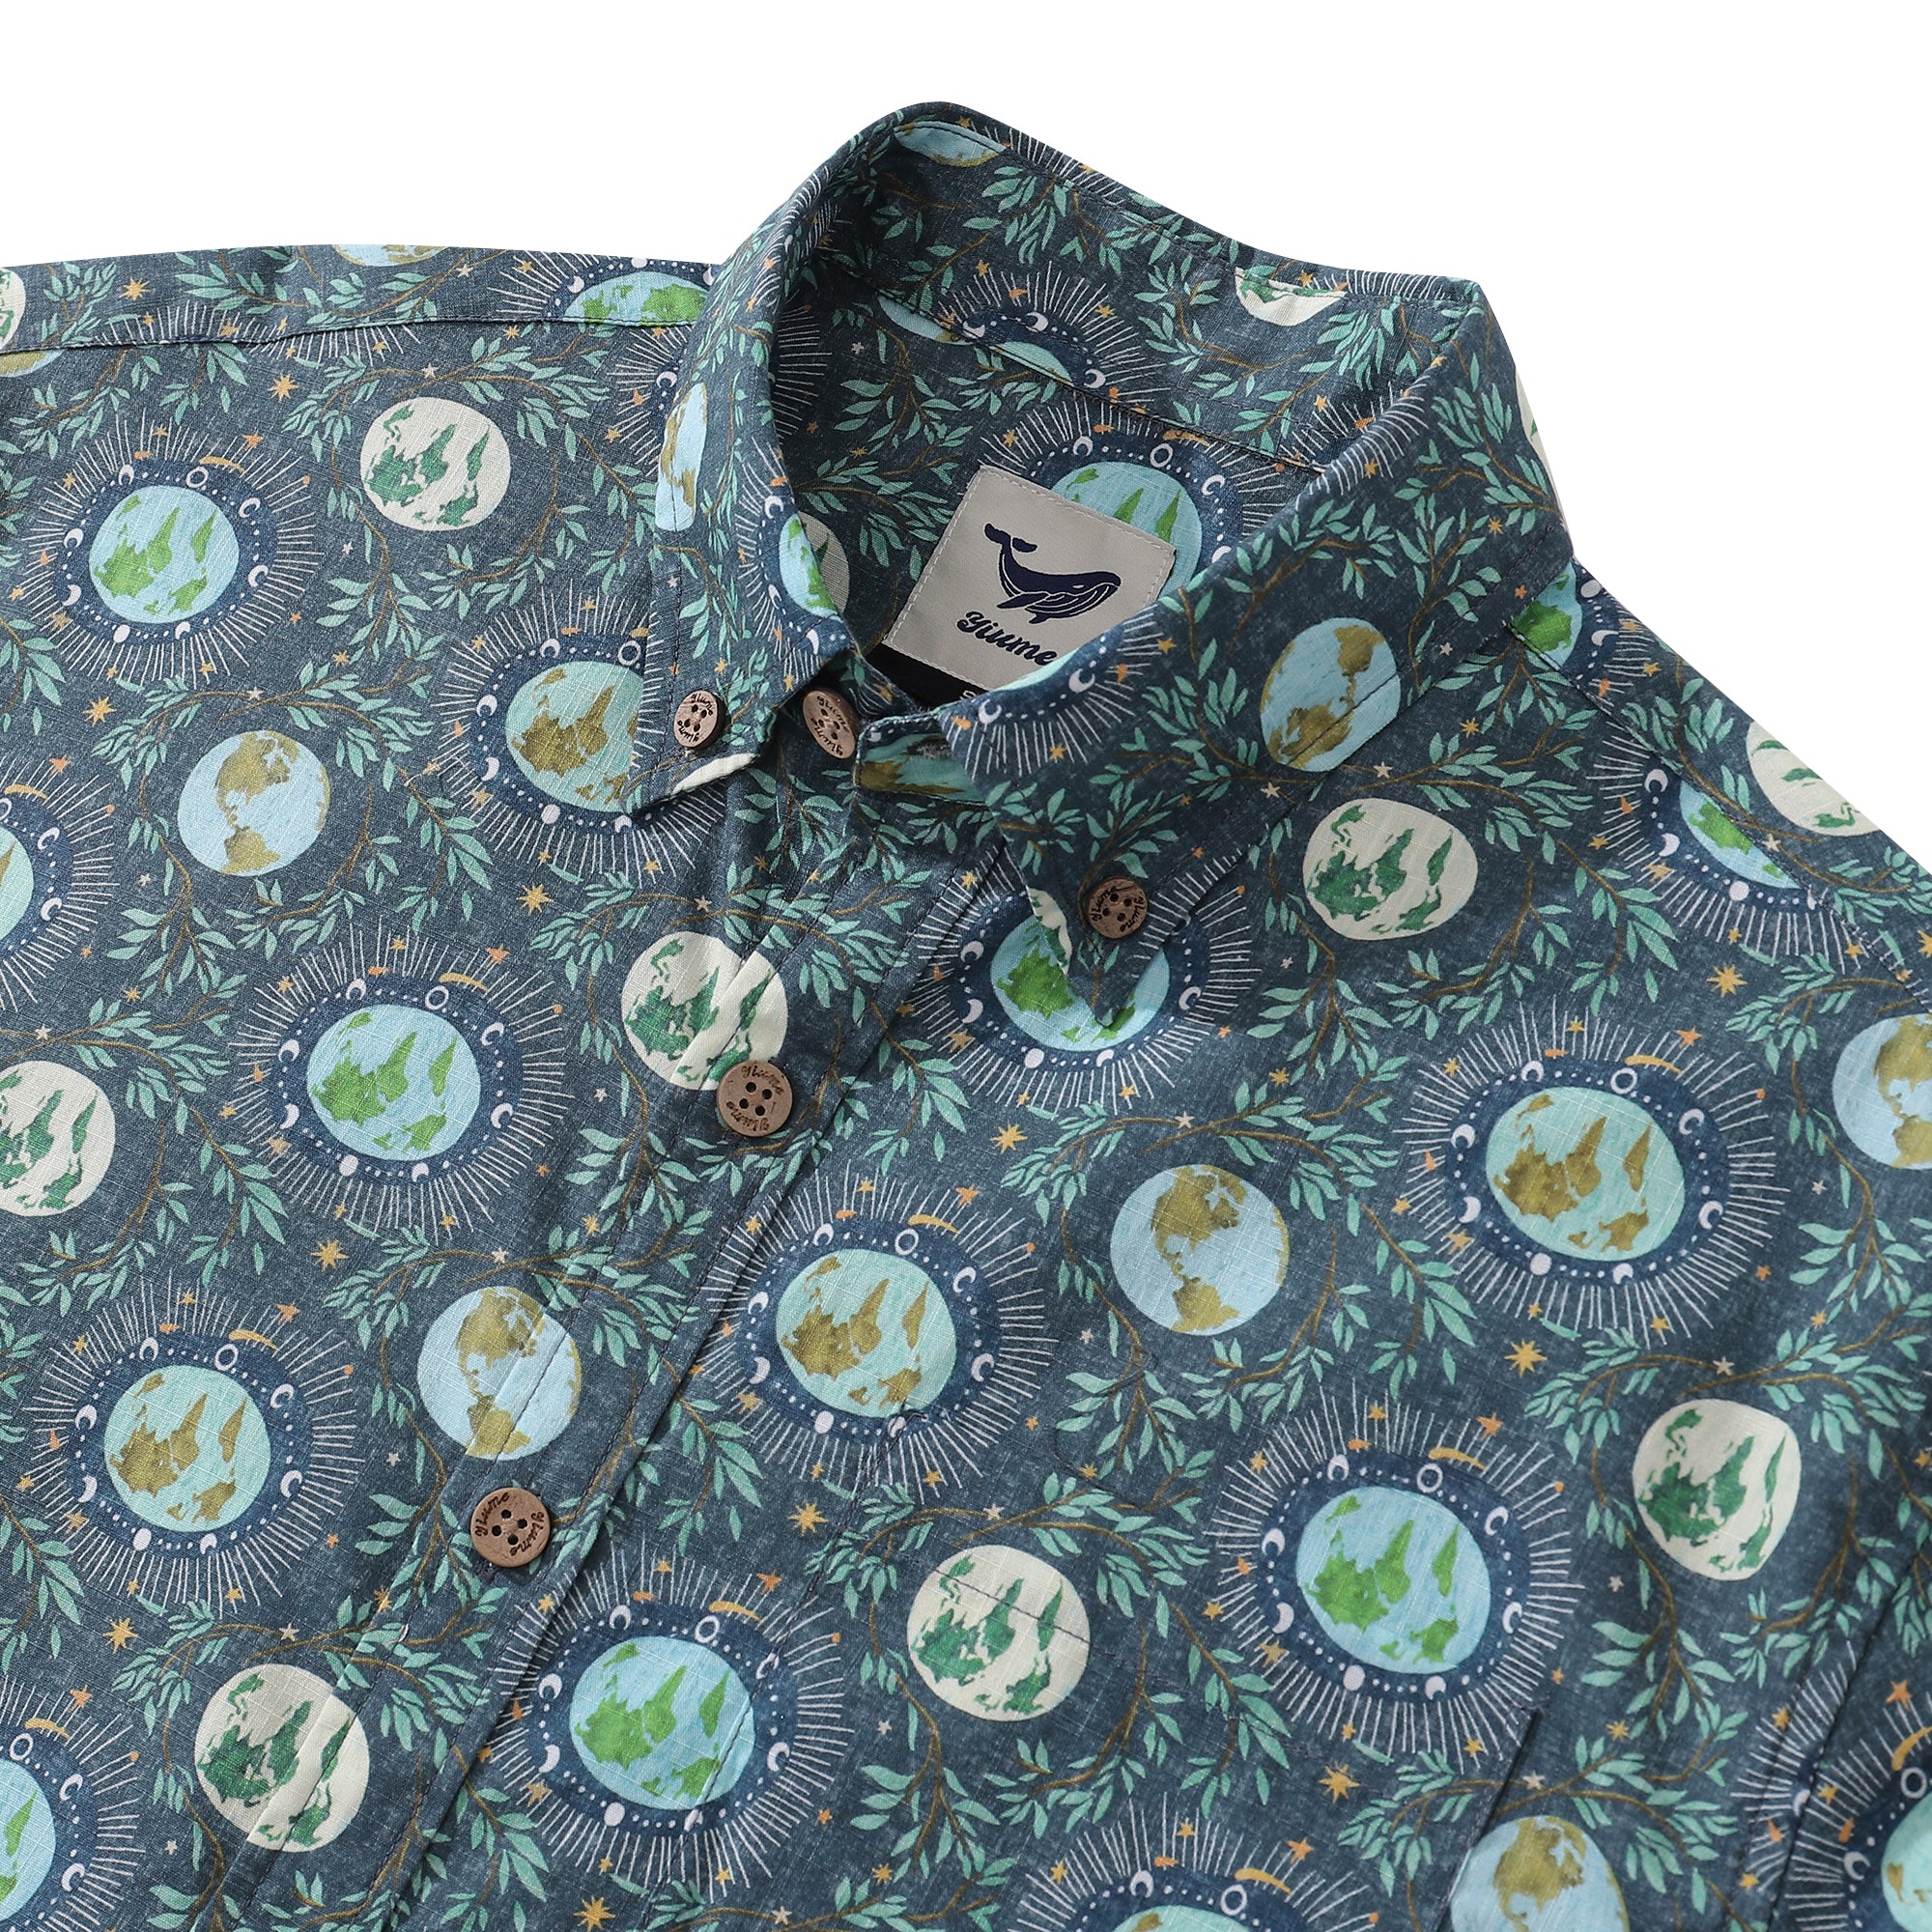 Men's Hawaiian Shirt Planet Earth Day Shirt Cotton Button-down Short Sleeve Aloha Shirt